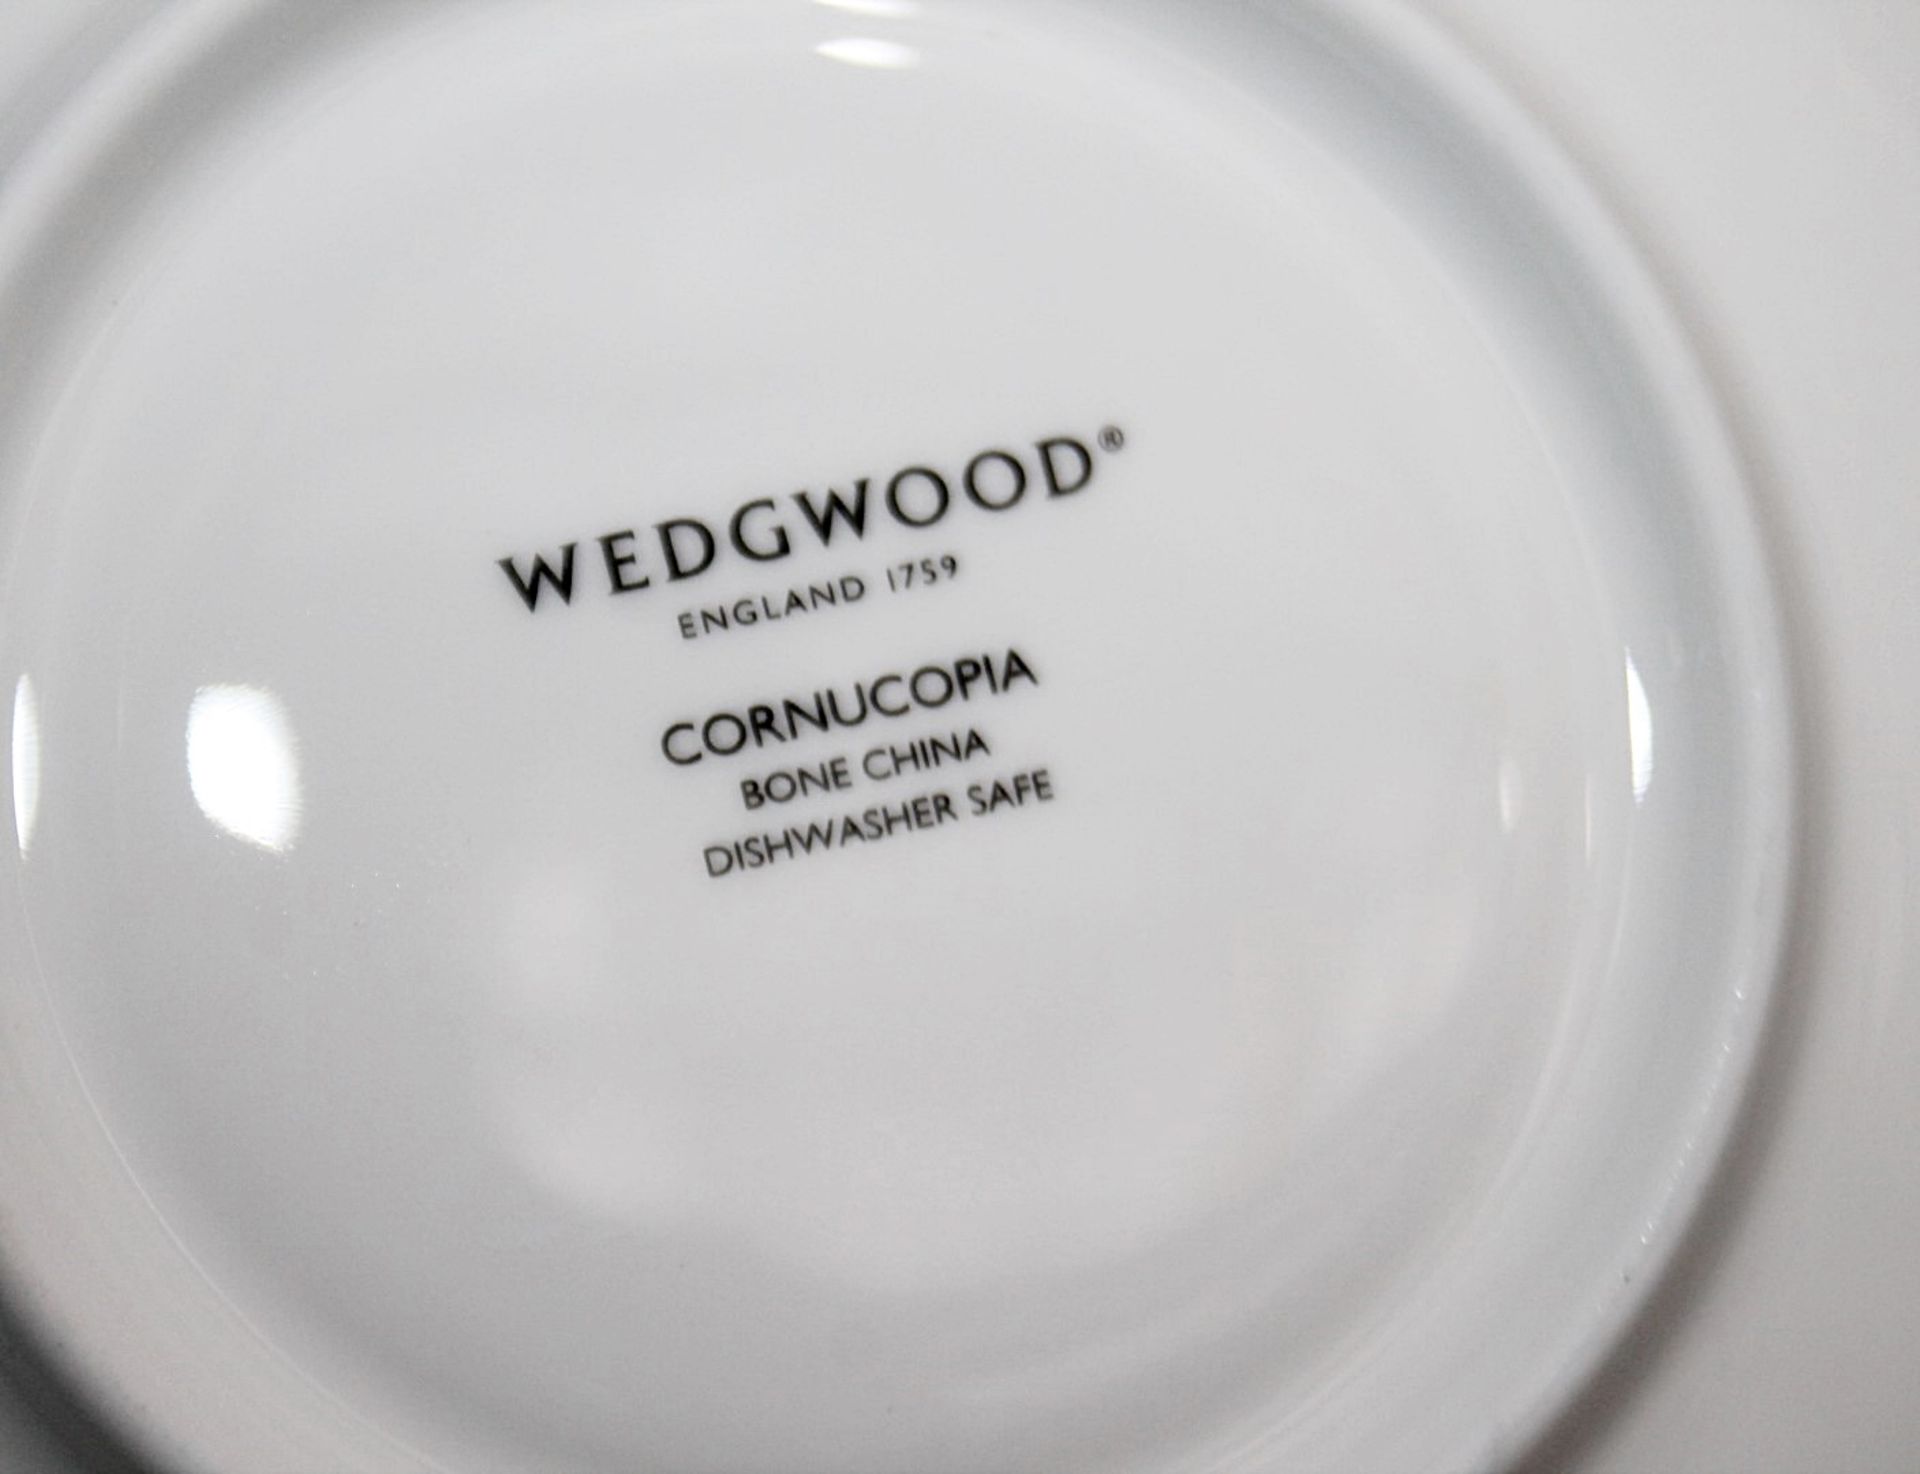 1 x Set of 2 WEDGWOOD 'Cornucopia' Fine Bone China Teacups and Saucers, With 22-Karat Gold Plating - Image 8 of 10